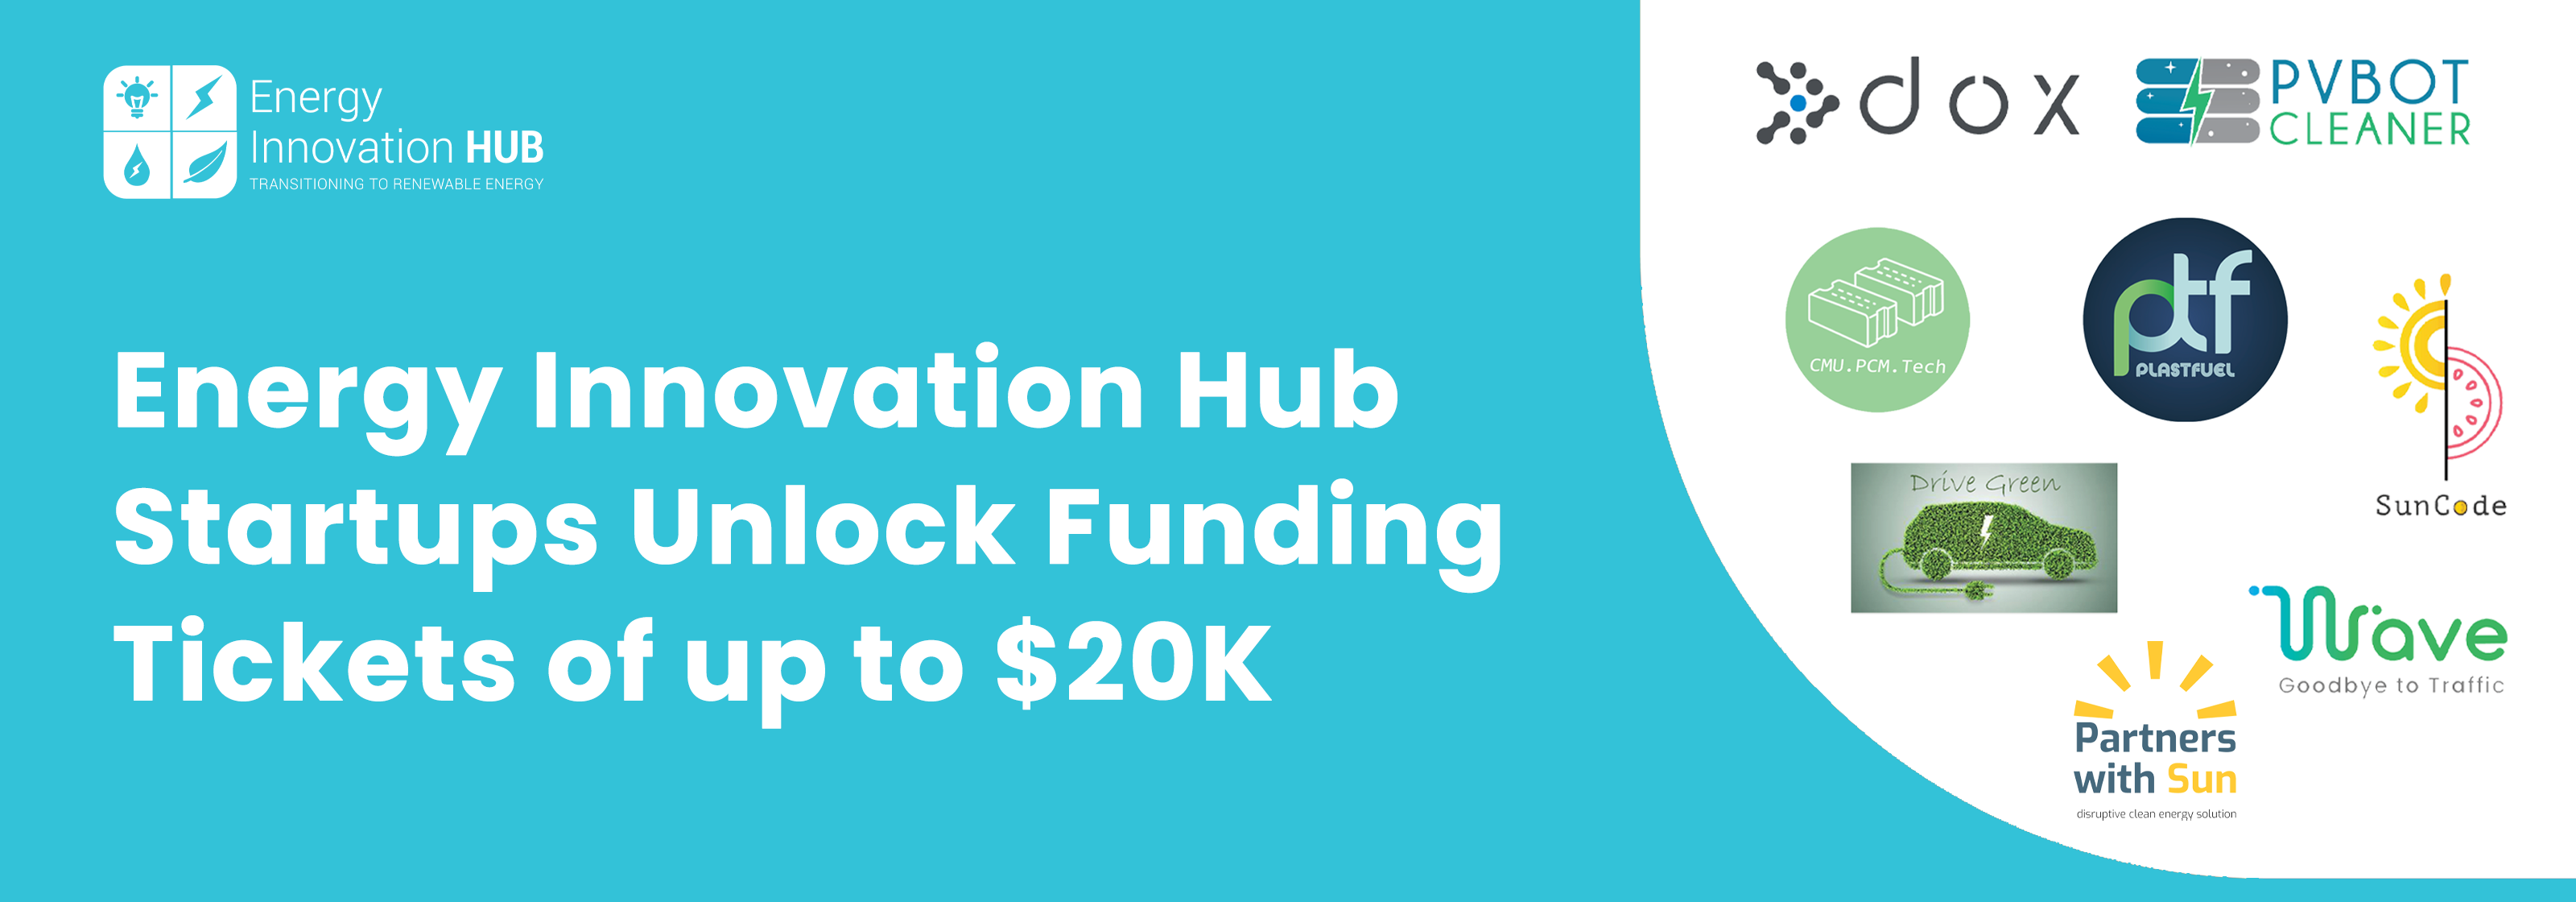 Energy Innovation Hub Startups Unlock Funding Tickets of up to 20K USD Each